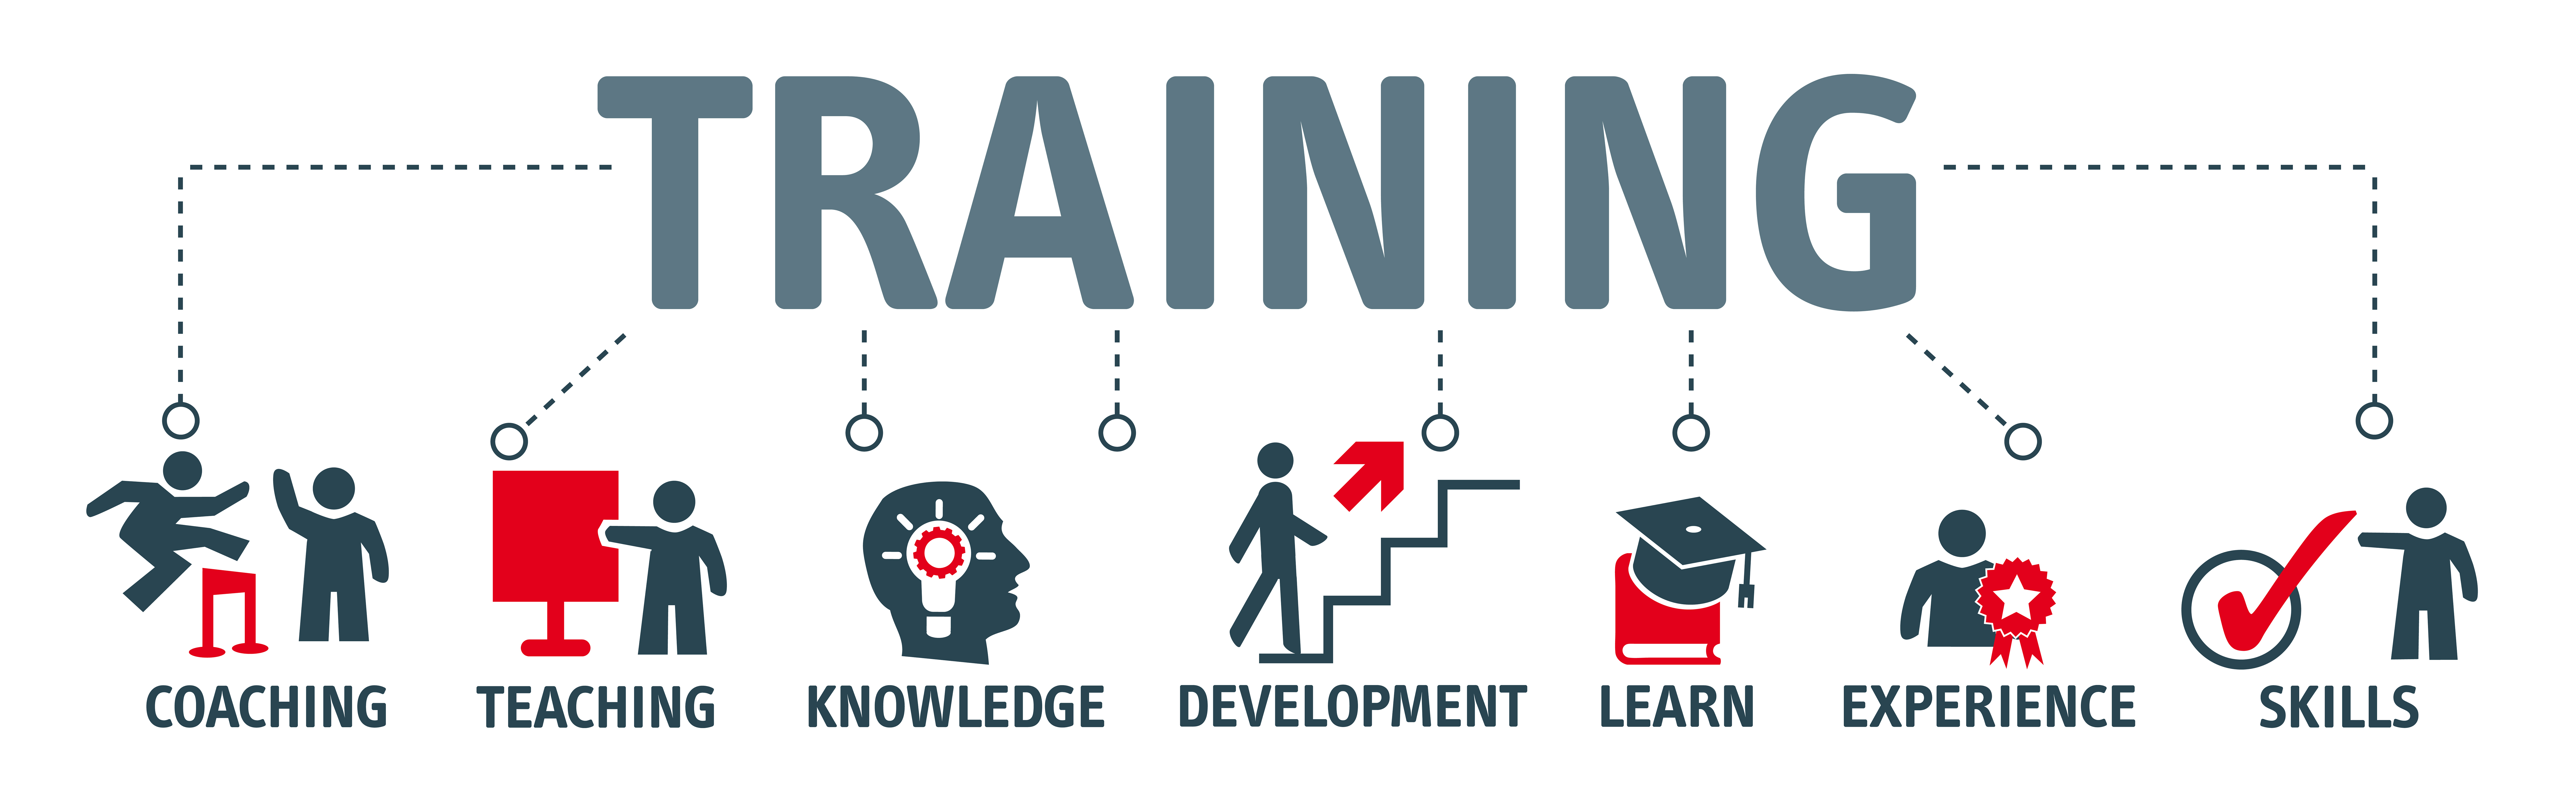 career training education